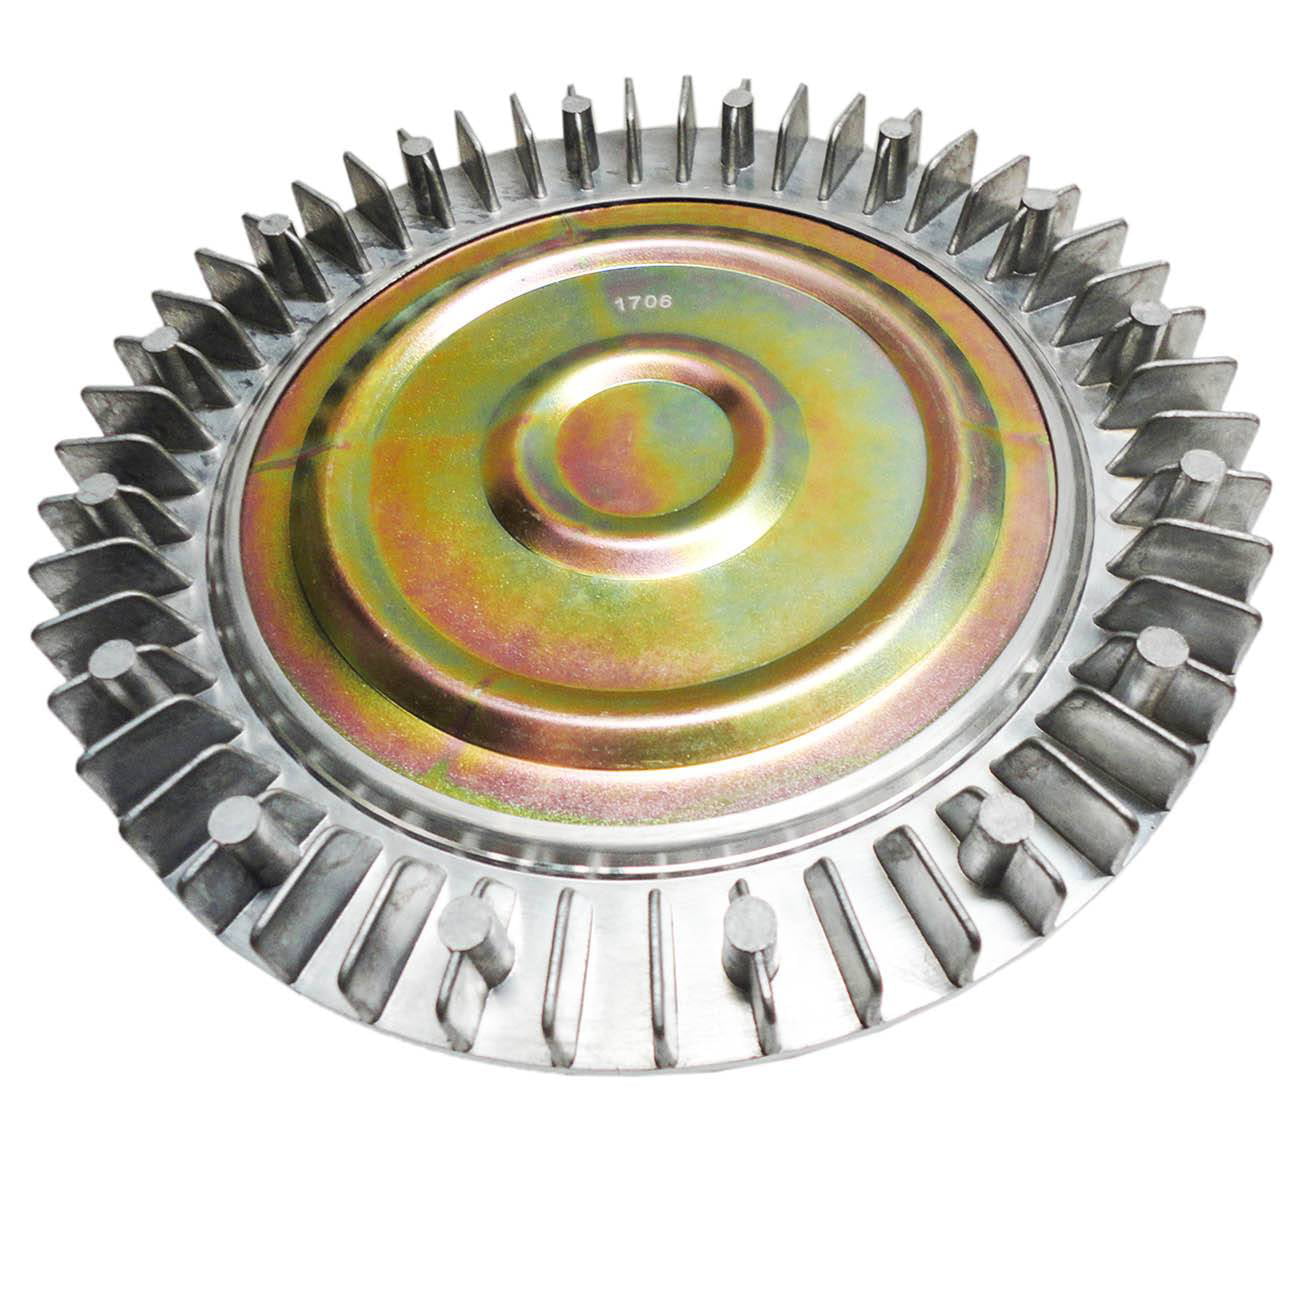 Parts & Accessories Engine Cooling Fan Clutch Hayden 1706 money 